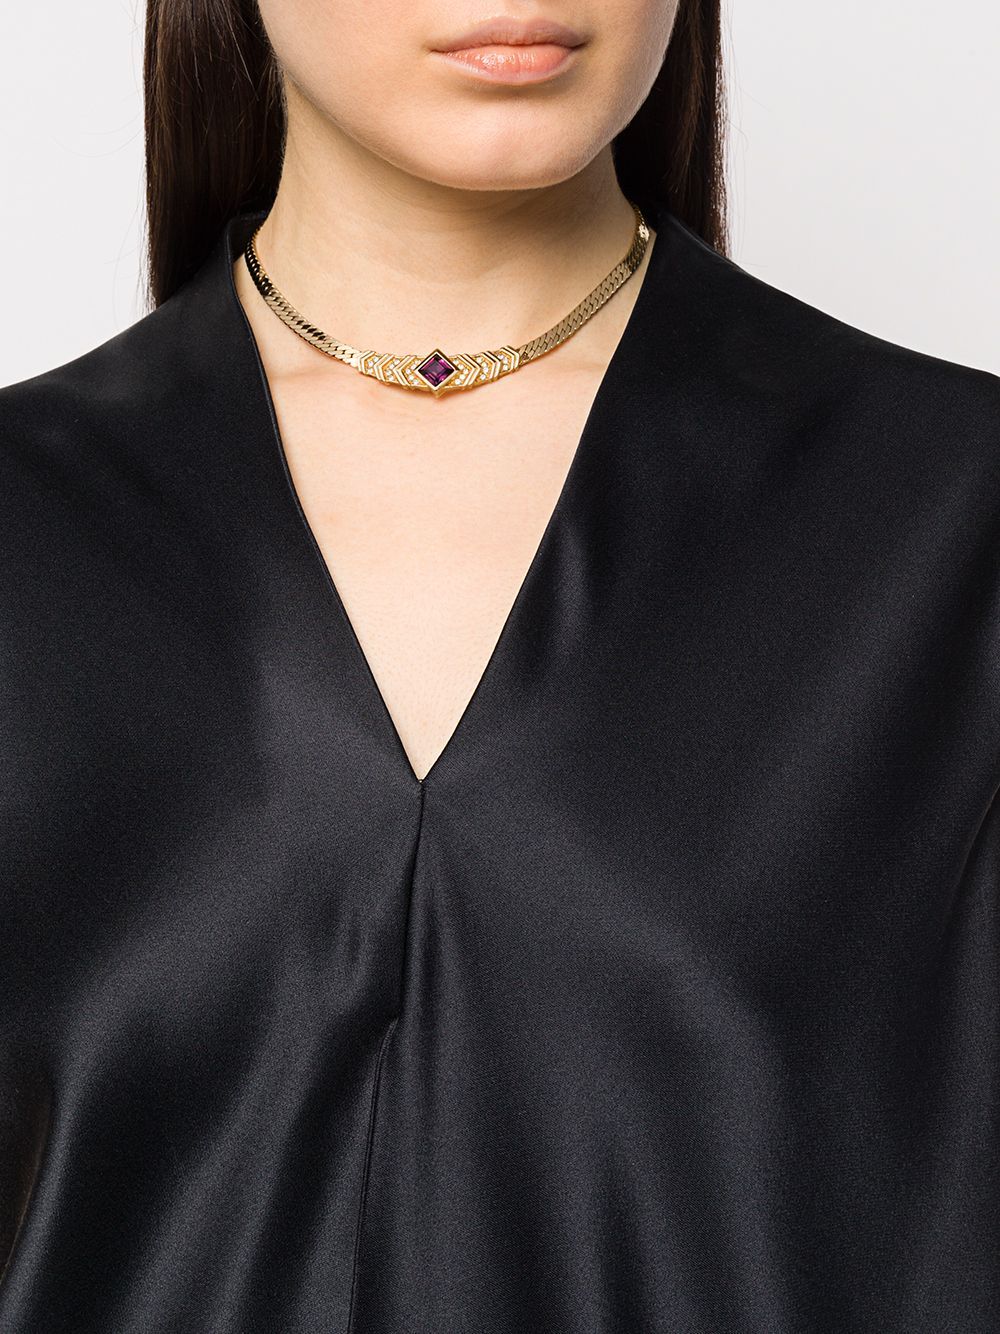 1980s embellished choker necklace | Farfetch (RoW)